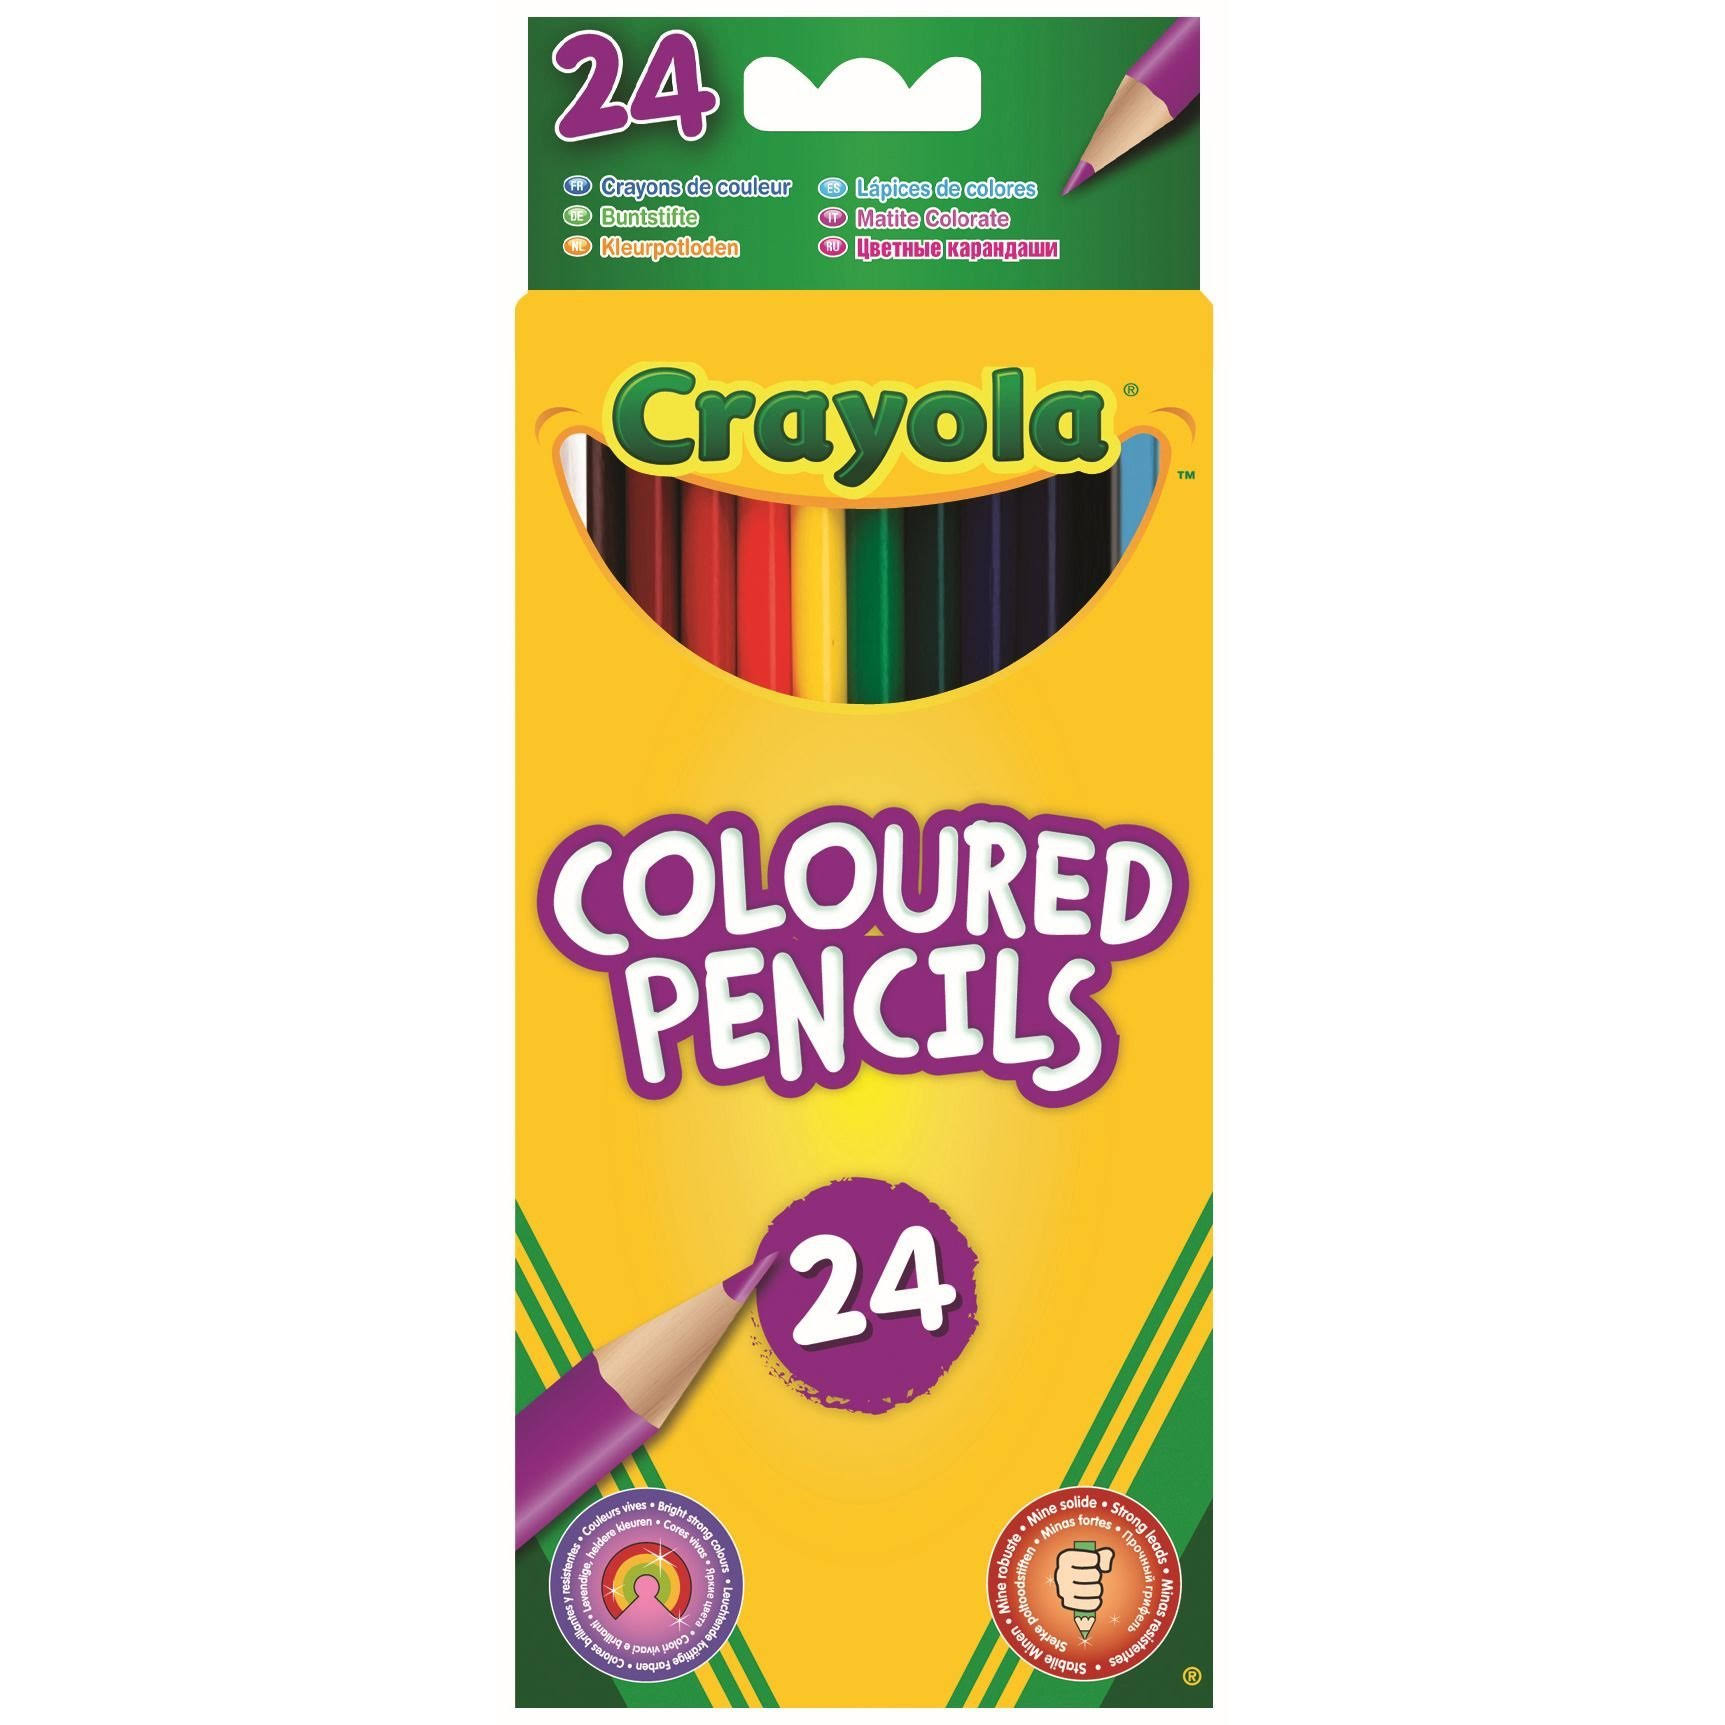 Crayola Coloured Pencils - 24pcs